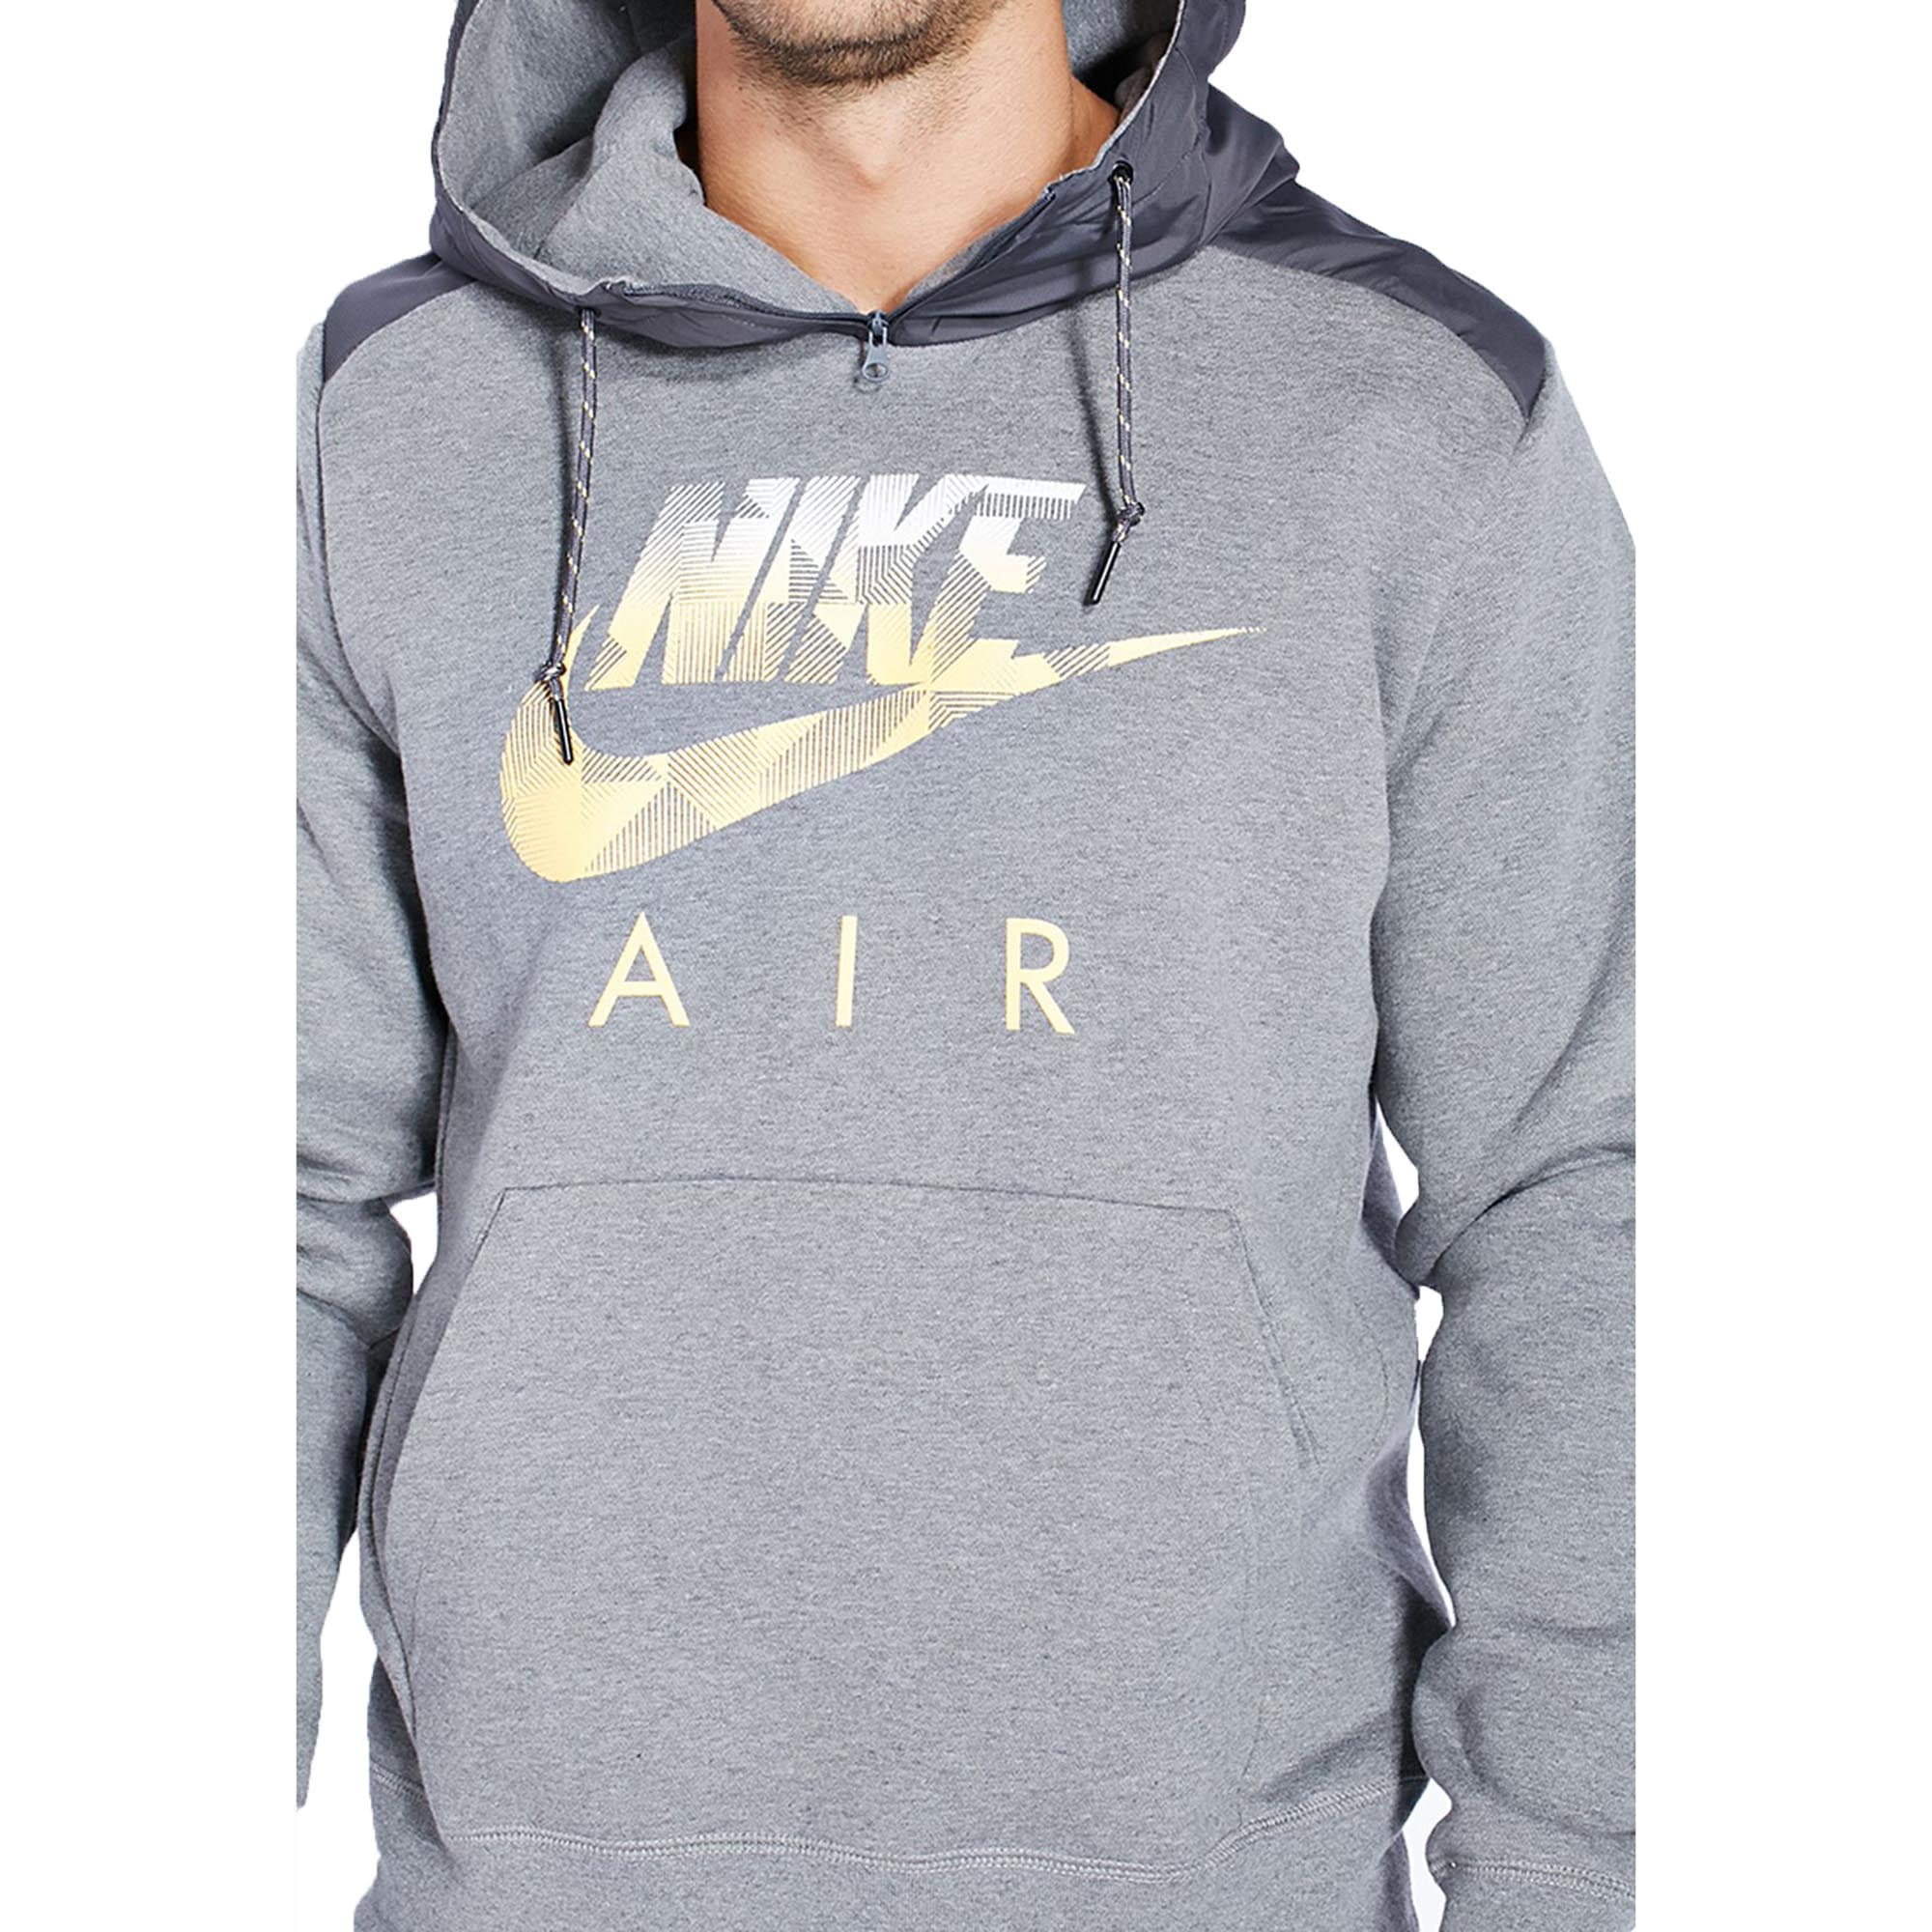 Nike AW77 Air Fleece MX Men's Hoodies Grey-Carbon Heather 678536-091 - Walmart.com